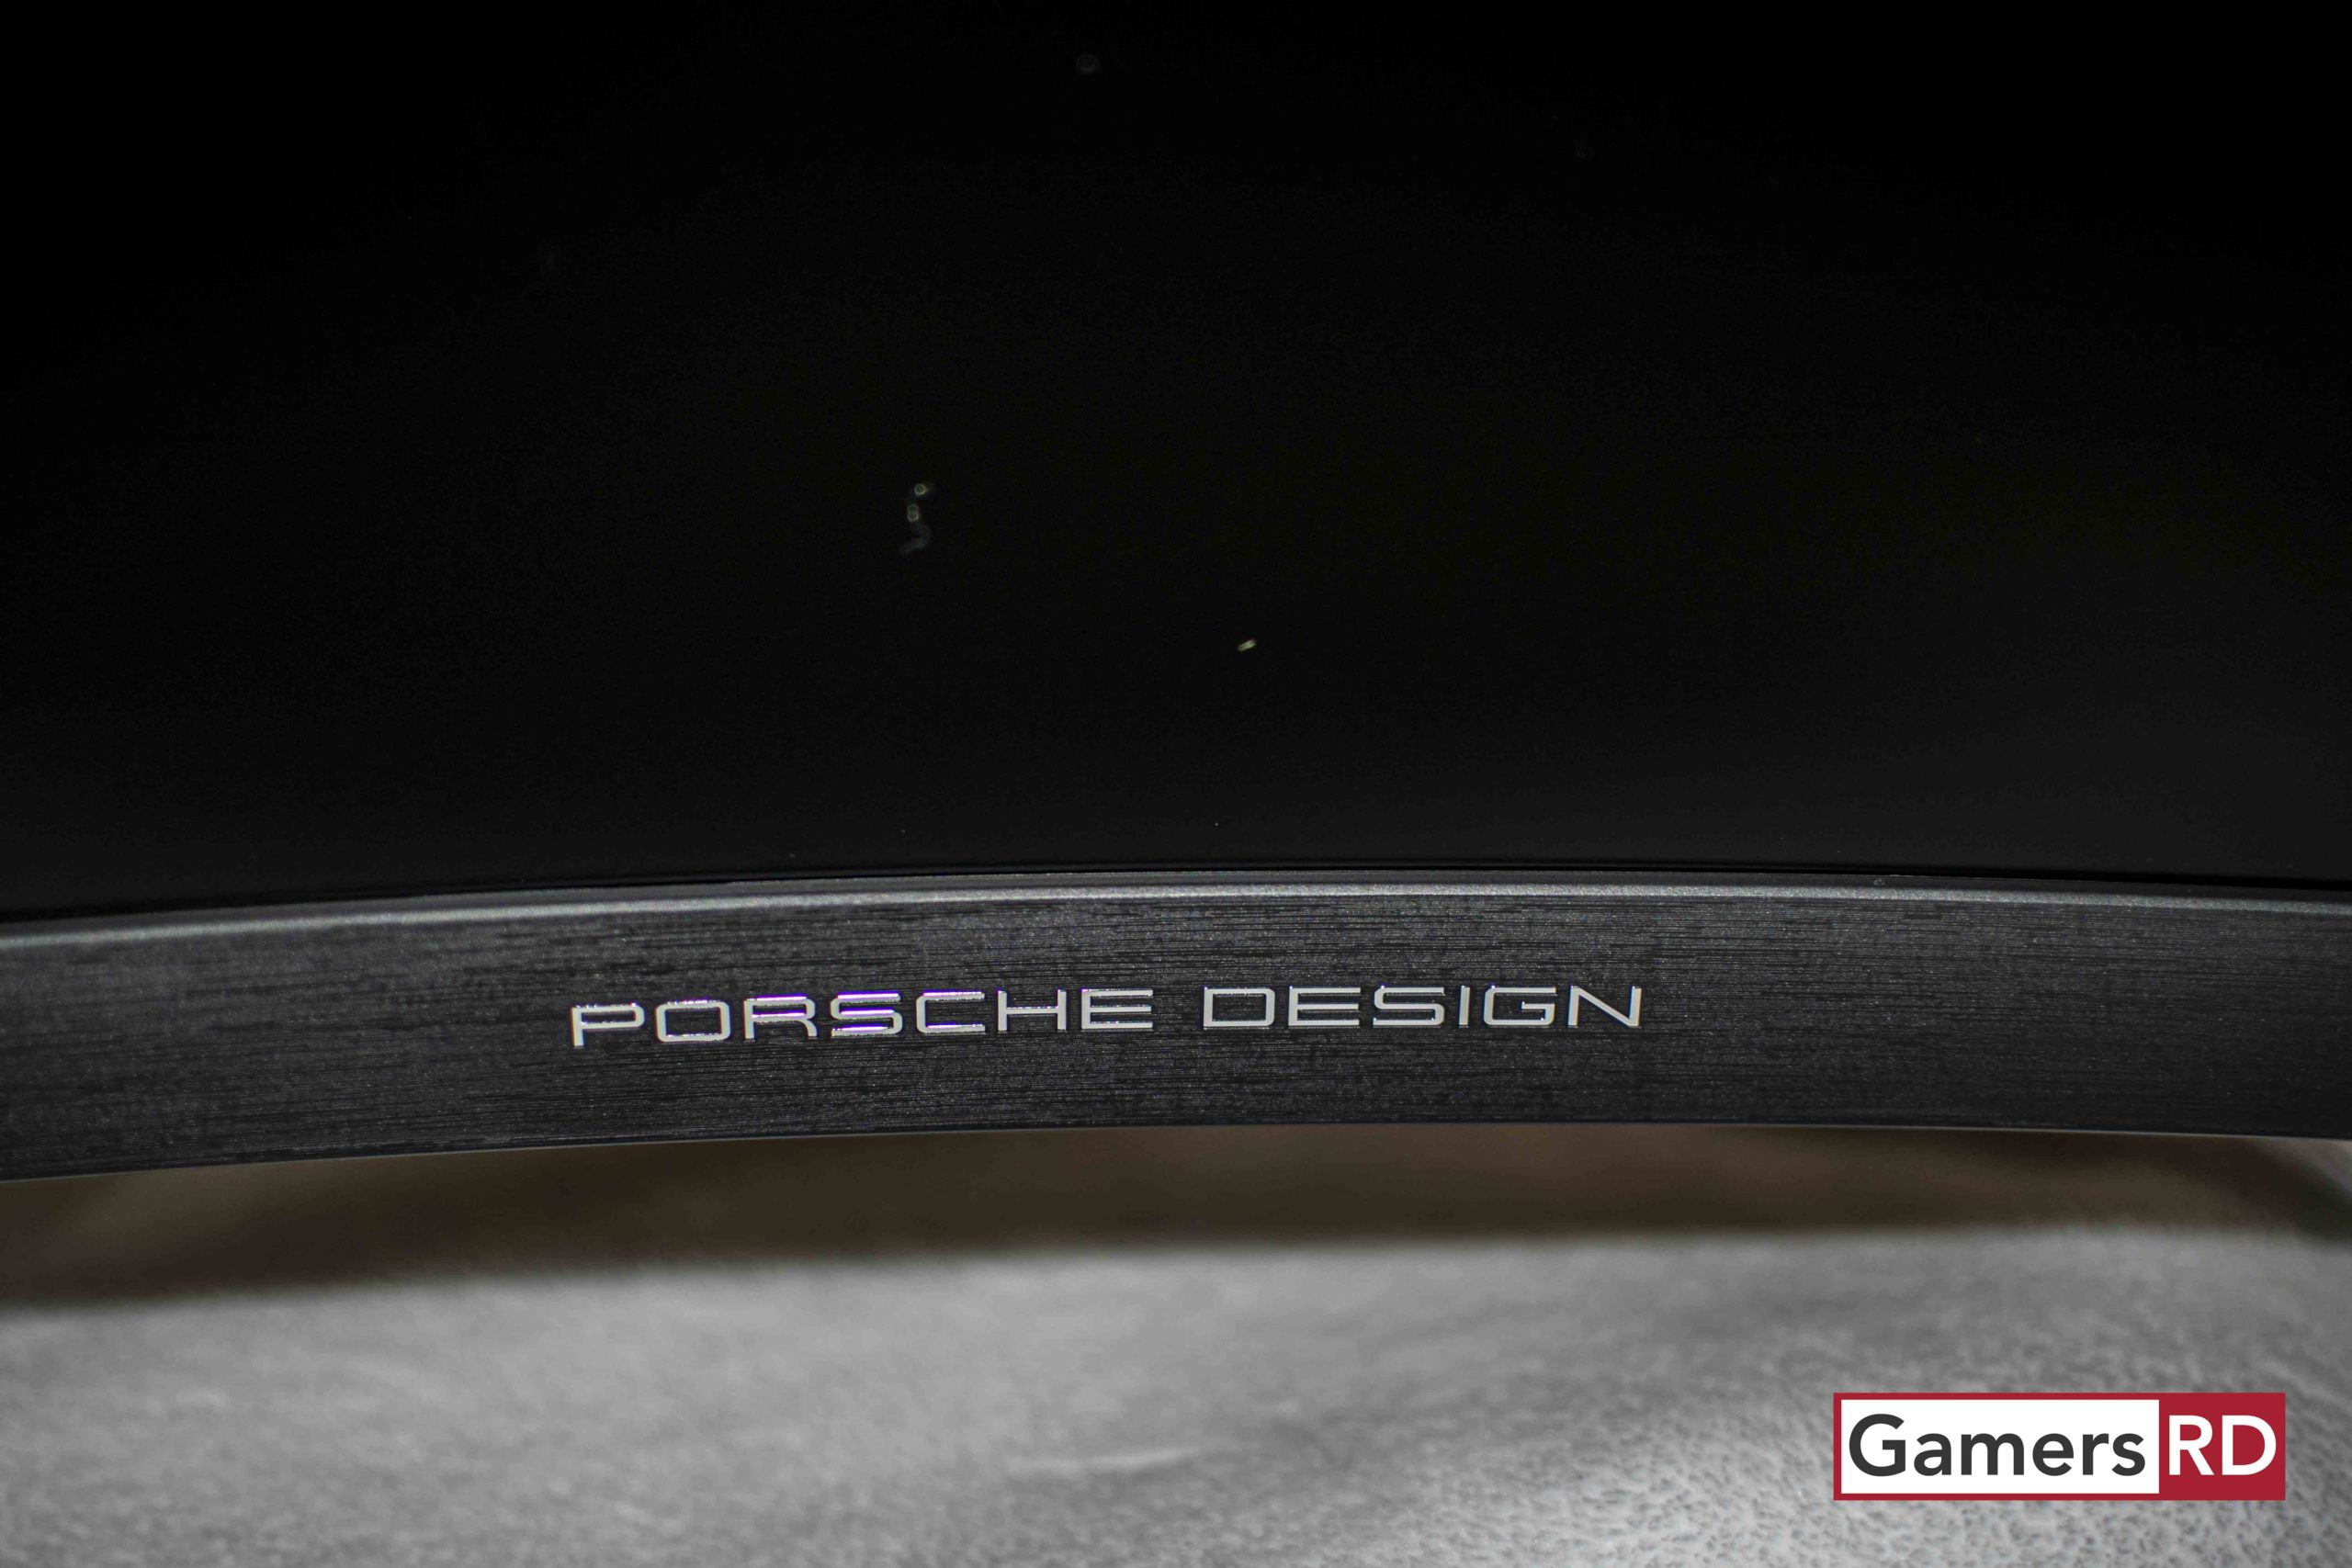 Porsche Design AOC AGON PD27 Gaming Monitor Review, 6 GamersRD